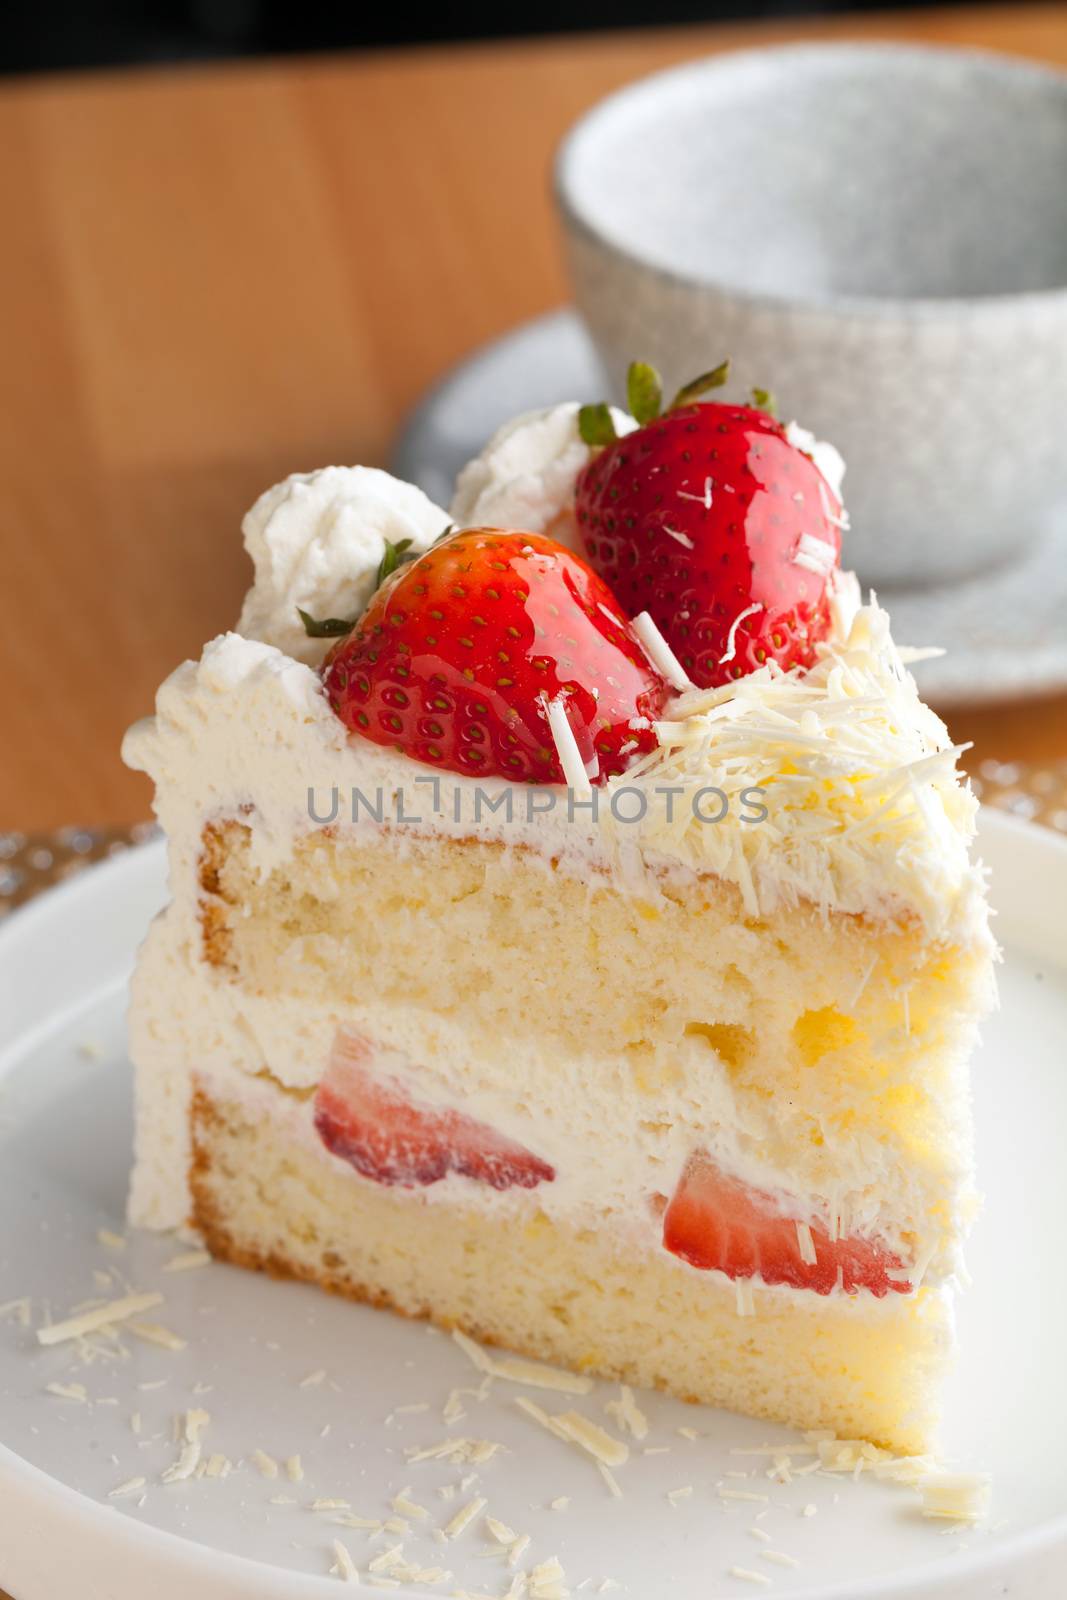 Strawberry Shortcake by graficallyminded